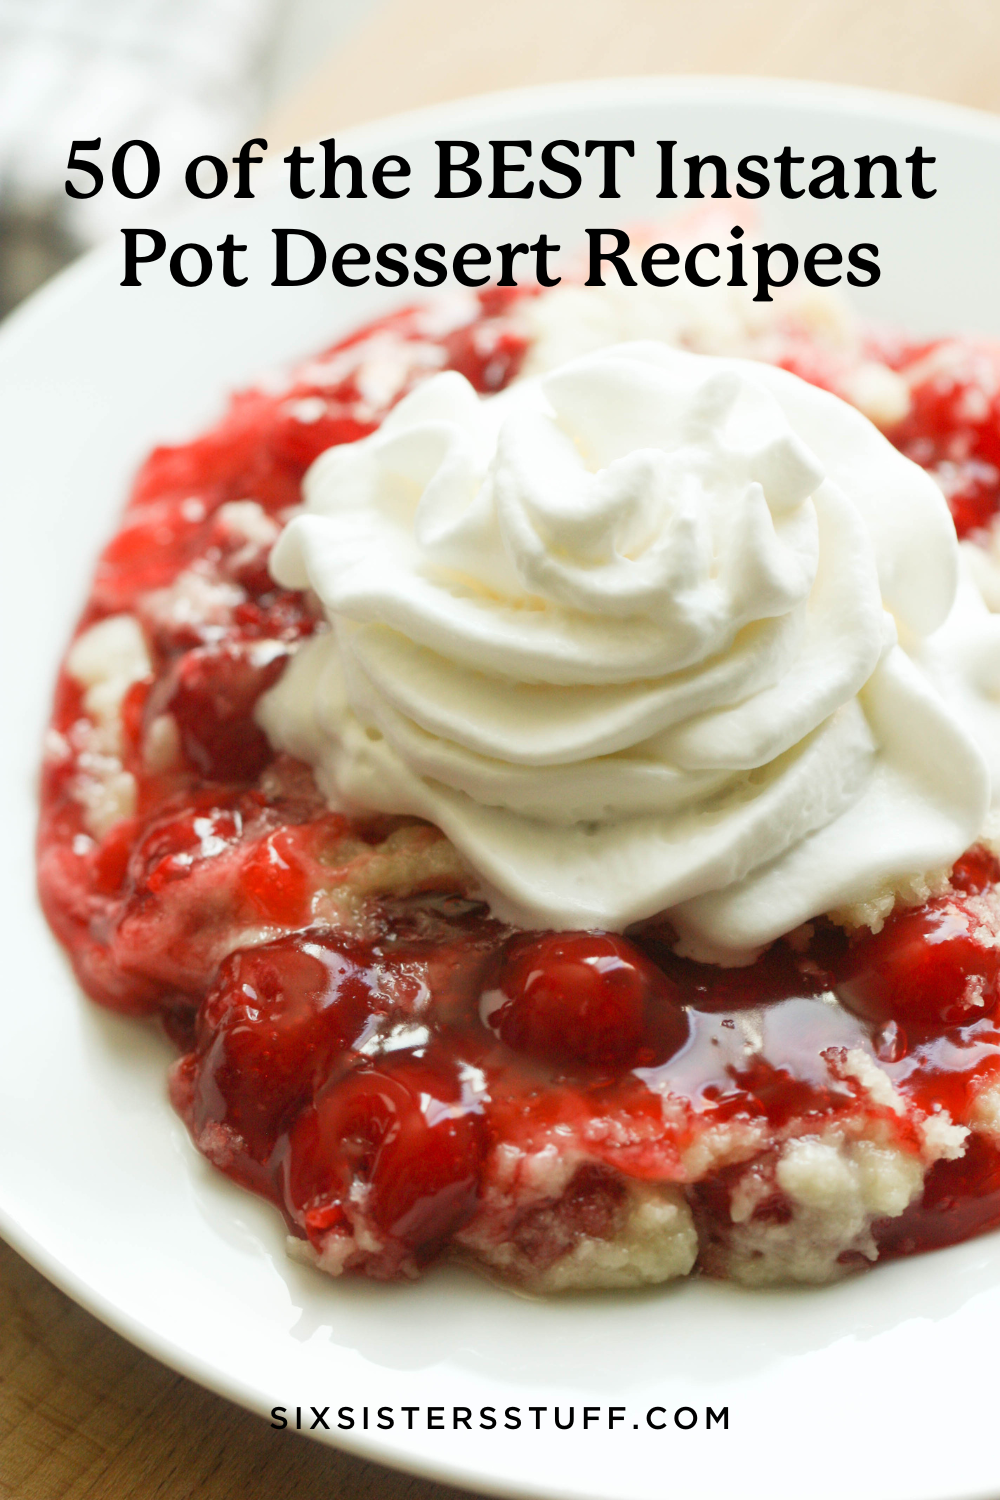 50 of the BEST Instant Pot Dessert Recipes